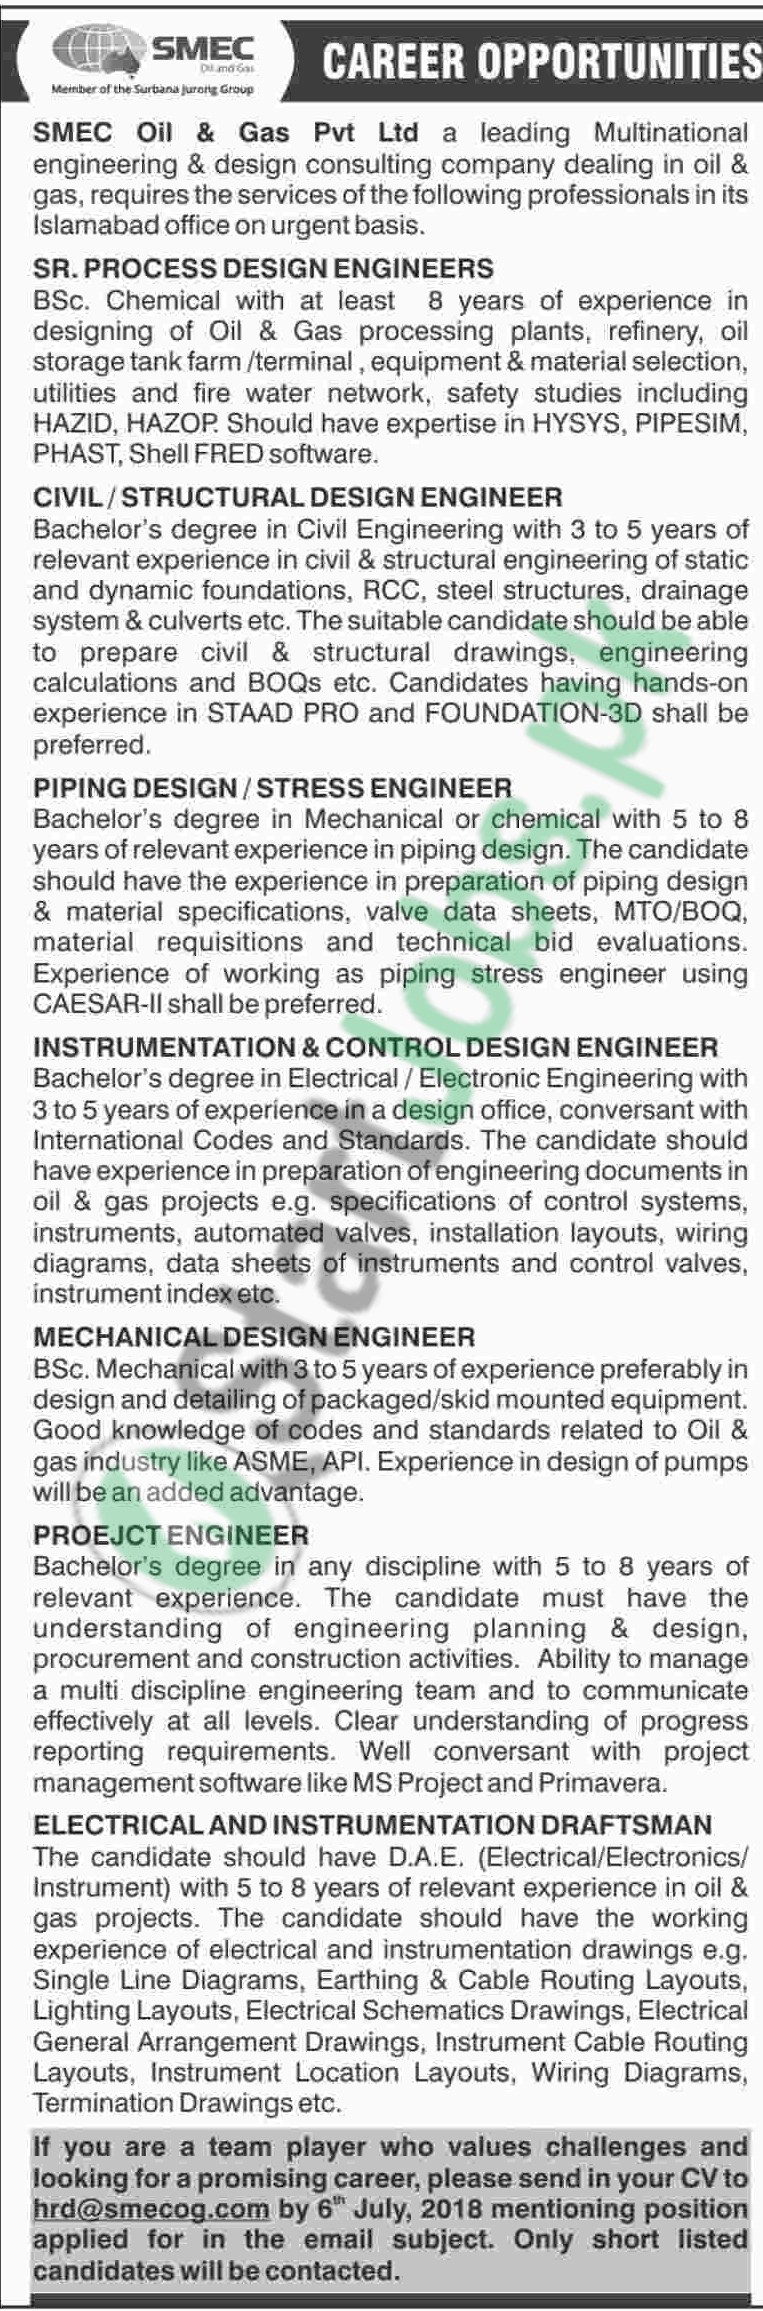 SMEC Oil & Gas Pvt Ltd Jobs 2018 in Islamabad (3).png